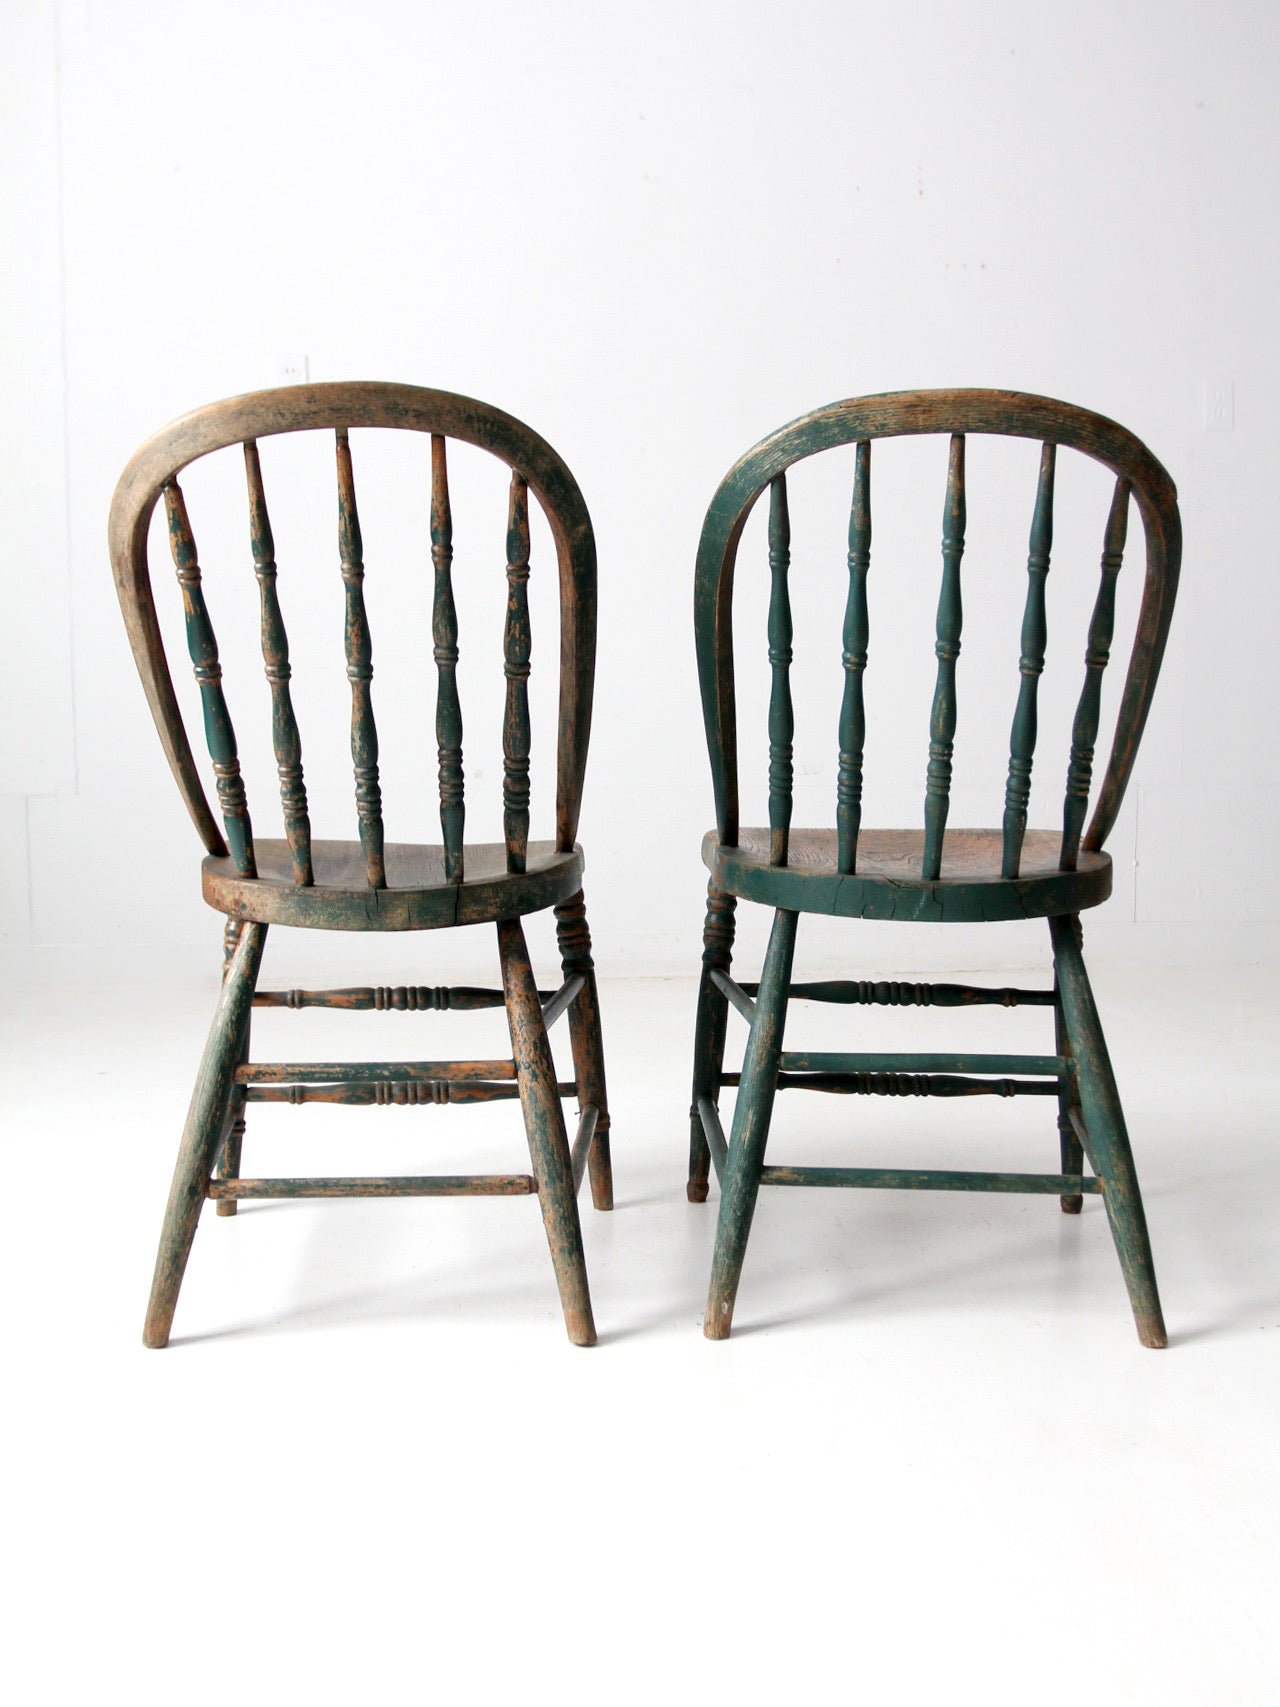 antique Windsor chair pair